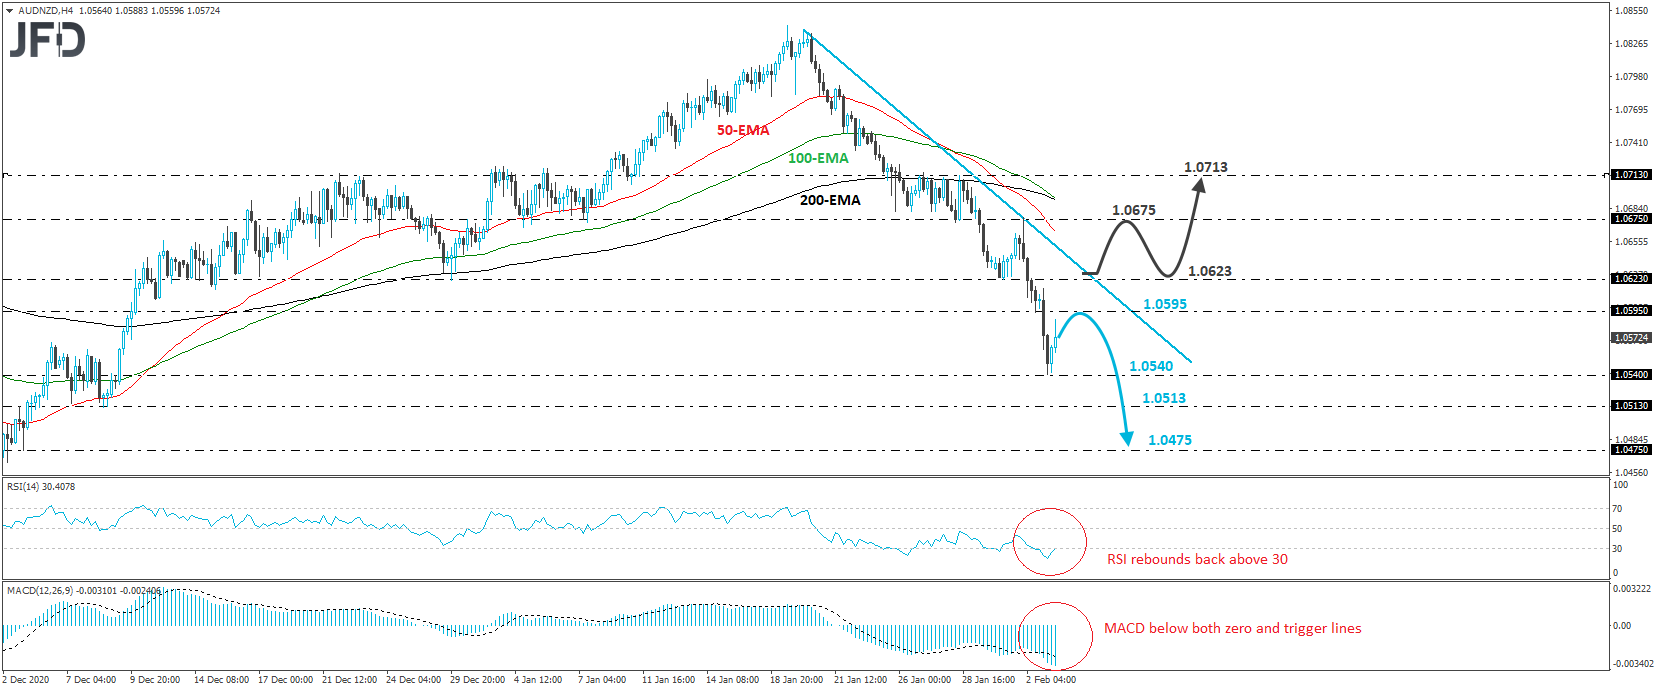 AUD/NZD 4-hour chart technical analysis